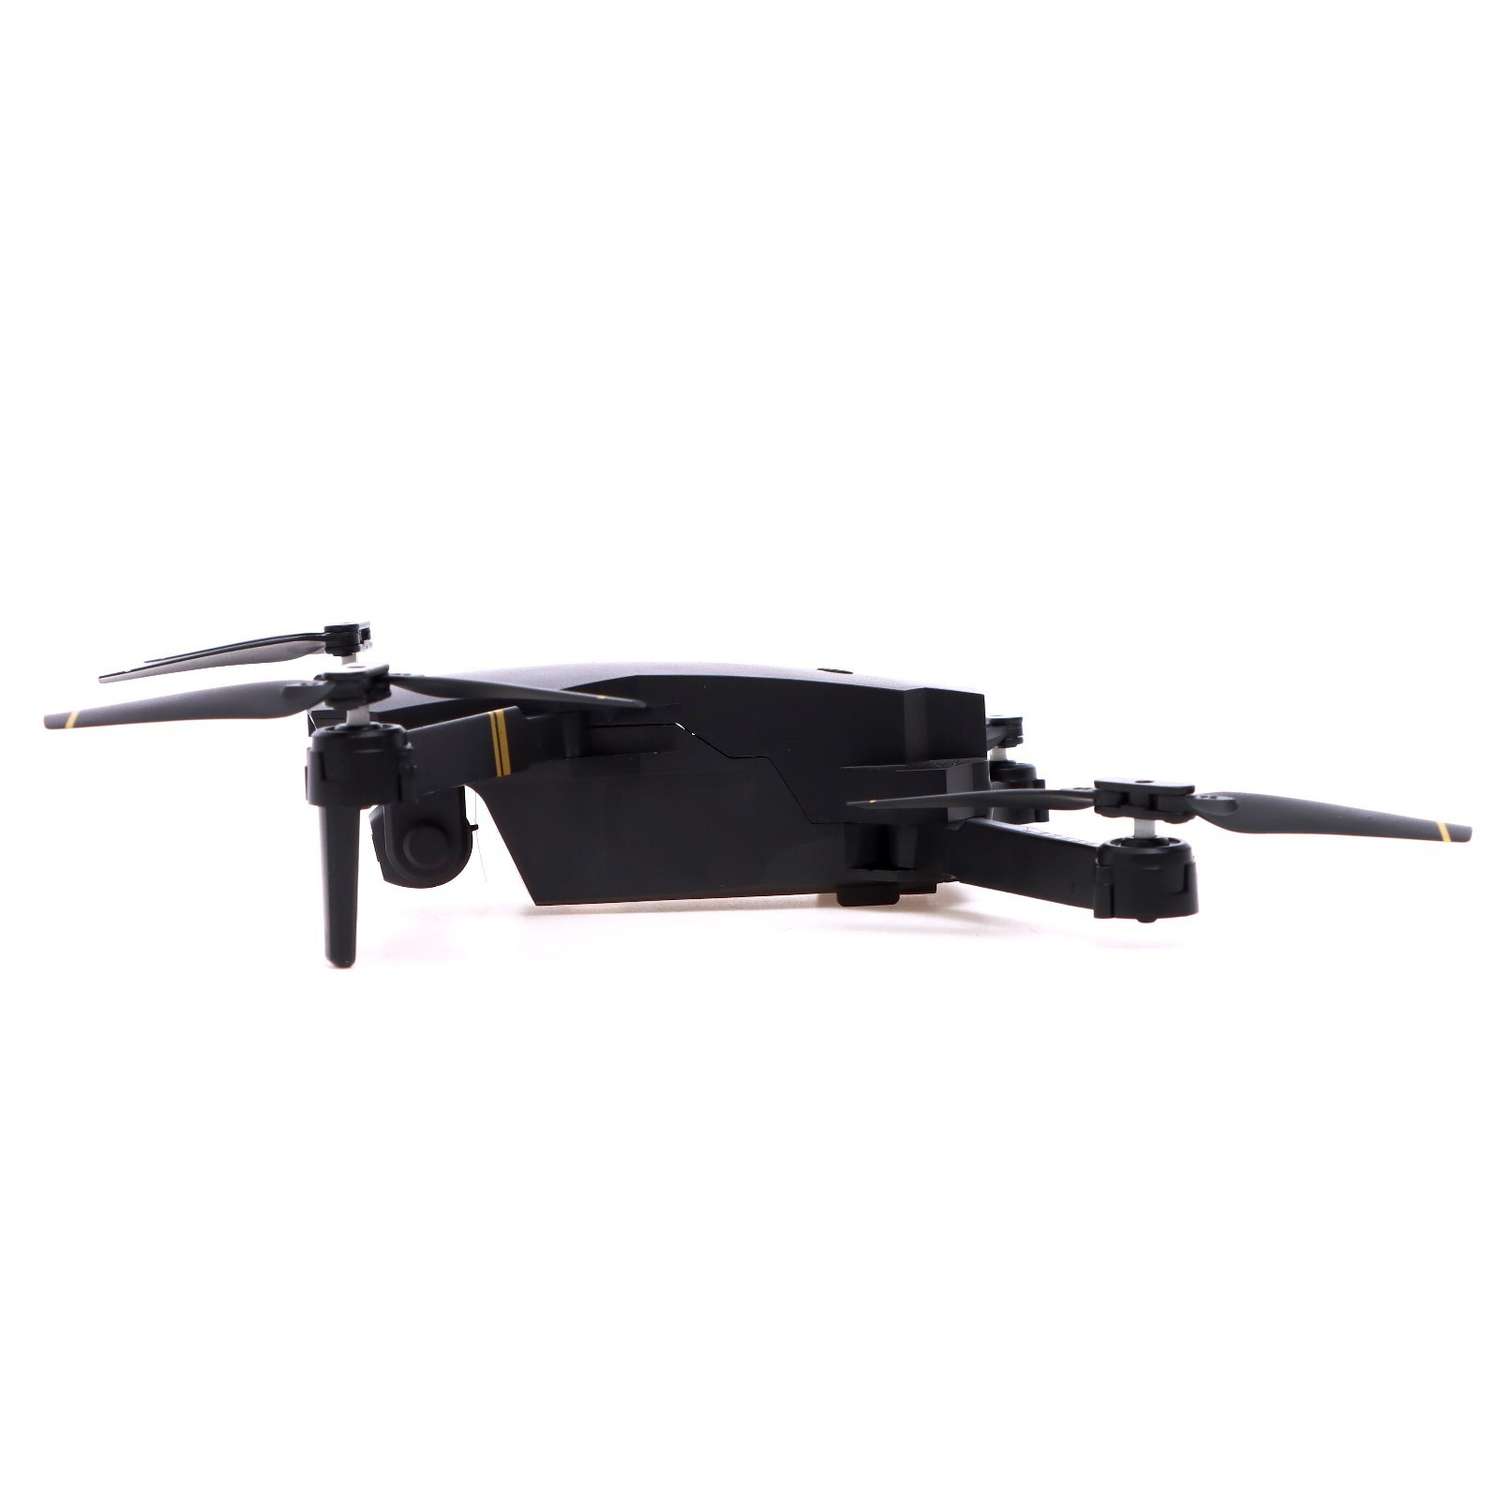 Квадрокоптер Автоград на радиоуправлении SKYDRONE камера 1080P барометр Wi Fi 2 аккумулятора цвет чёрный - фото 2